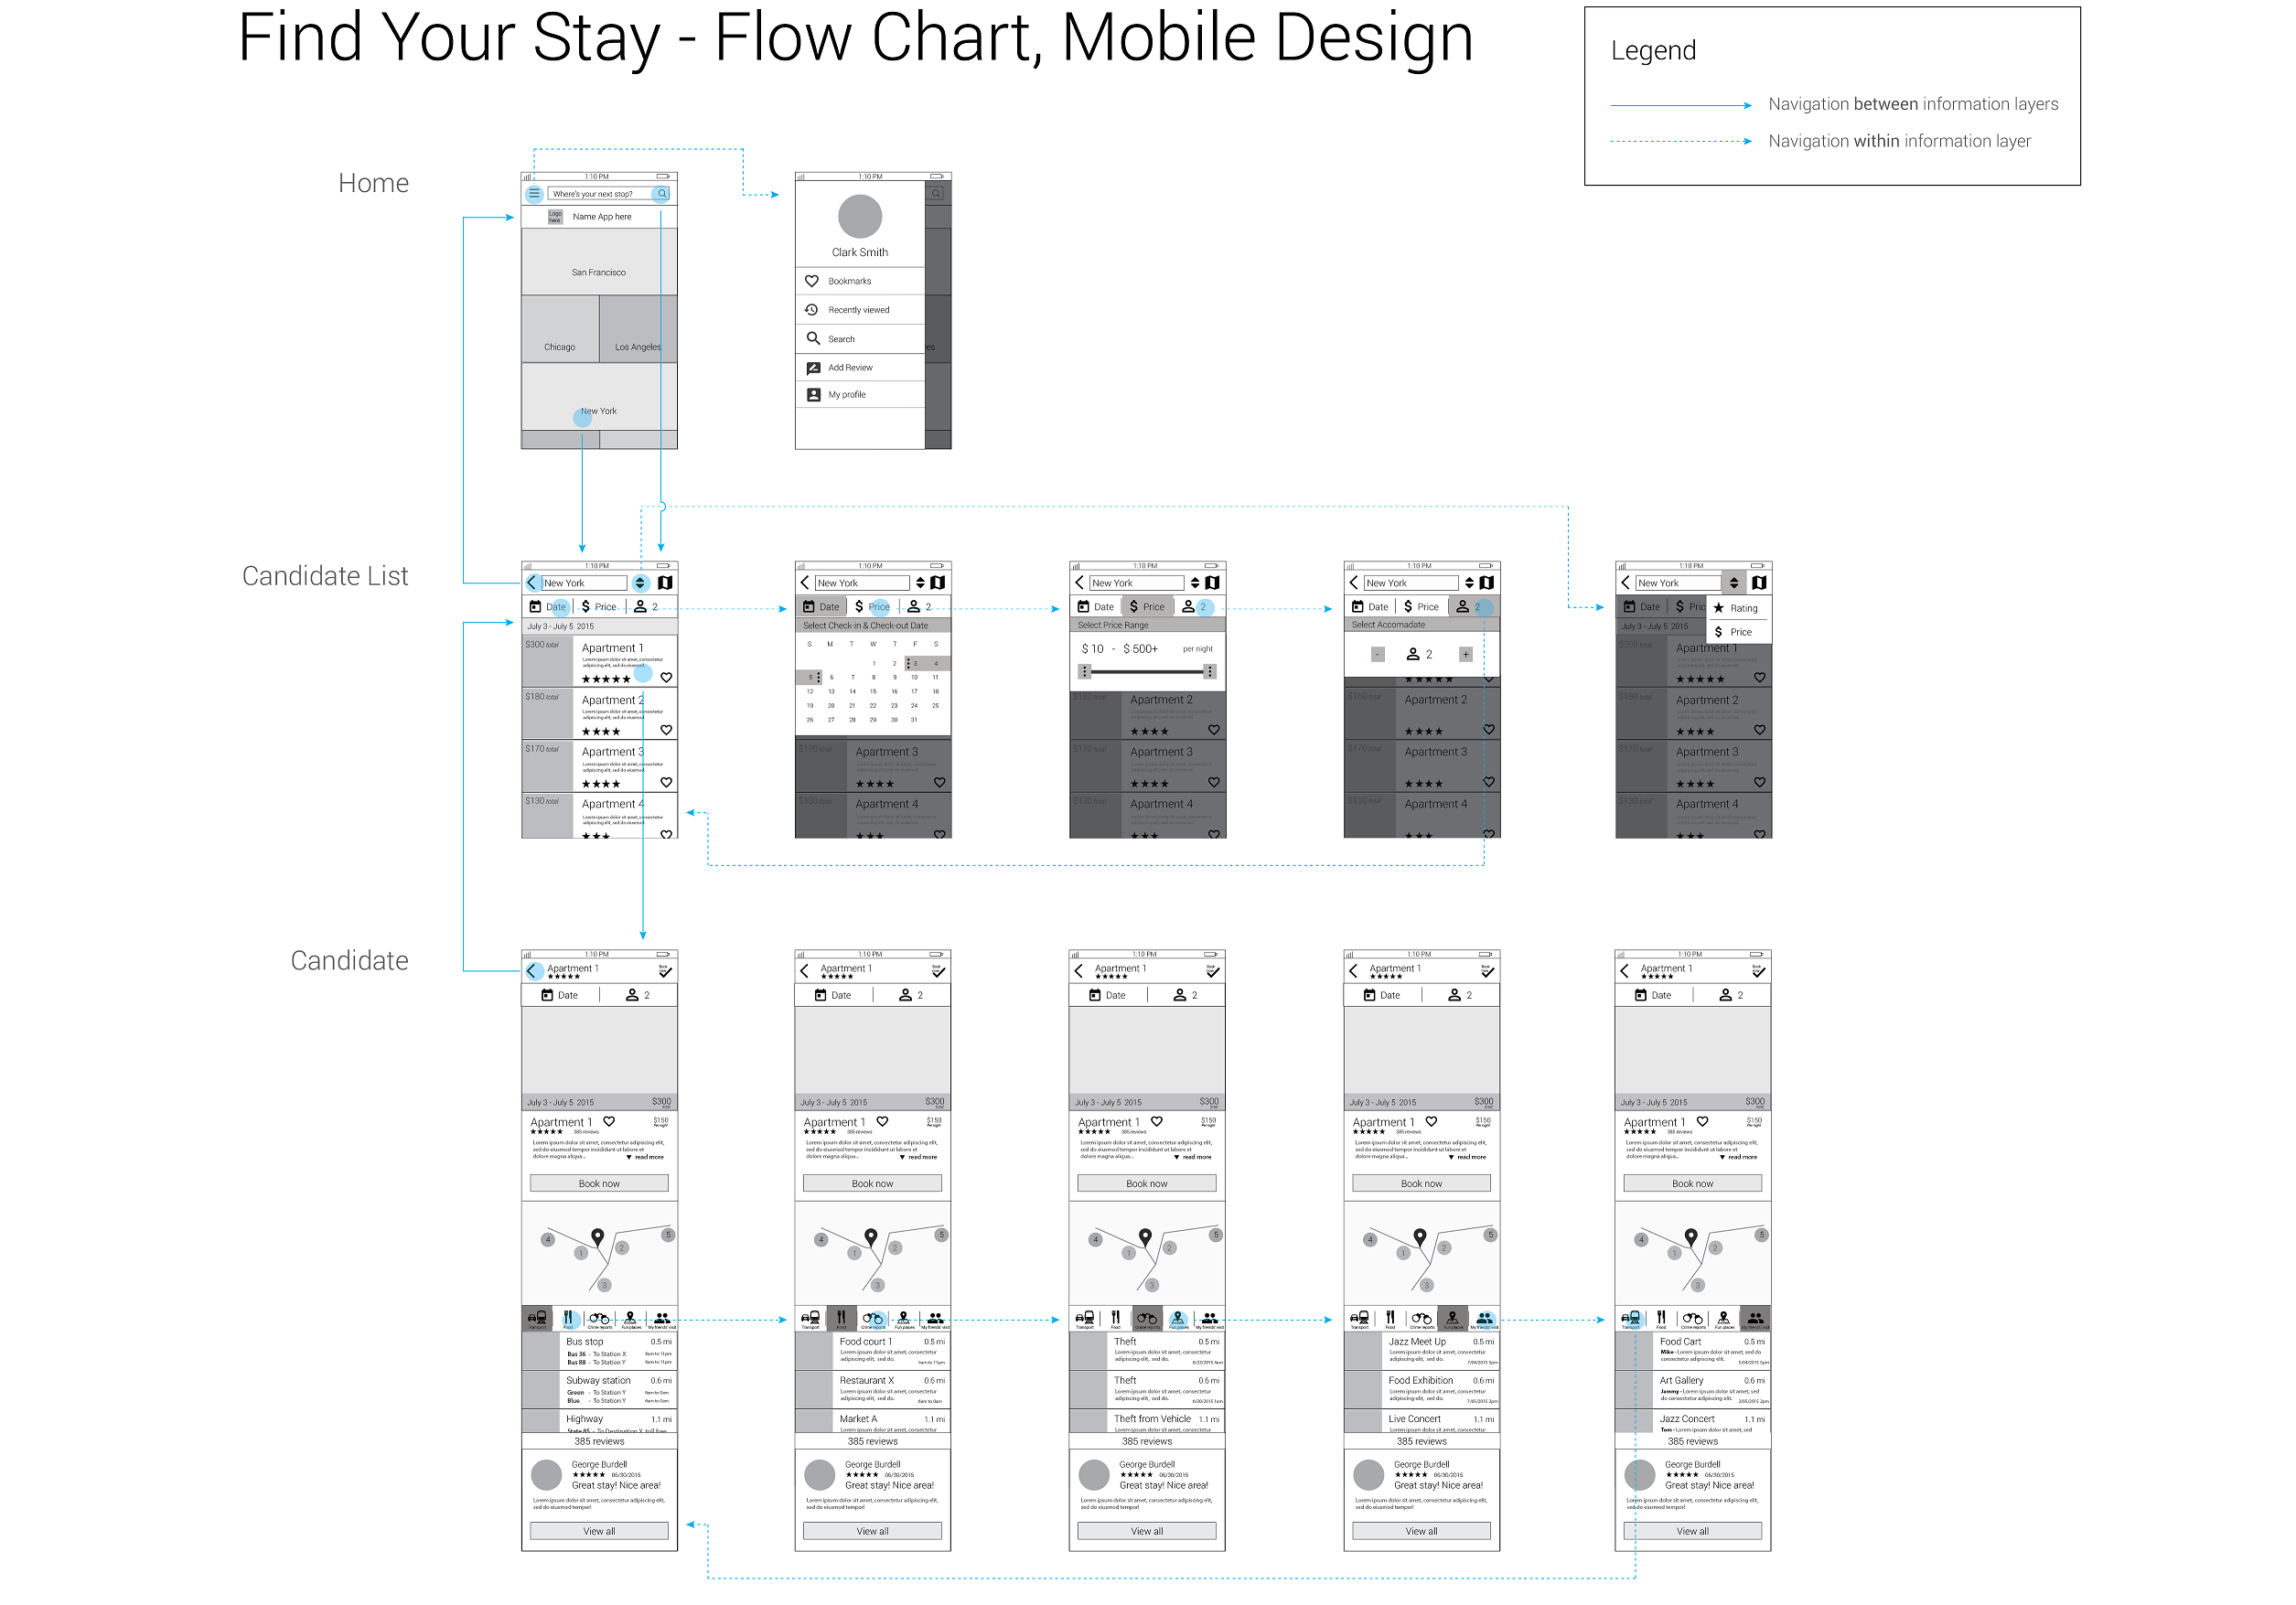 Flow Chart for Mobile Design